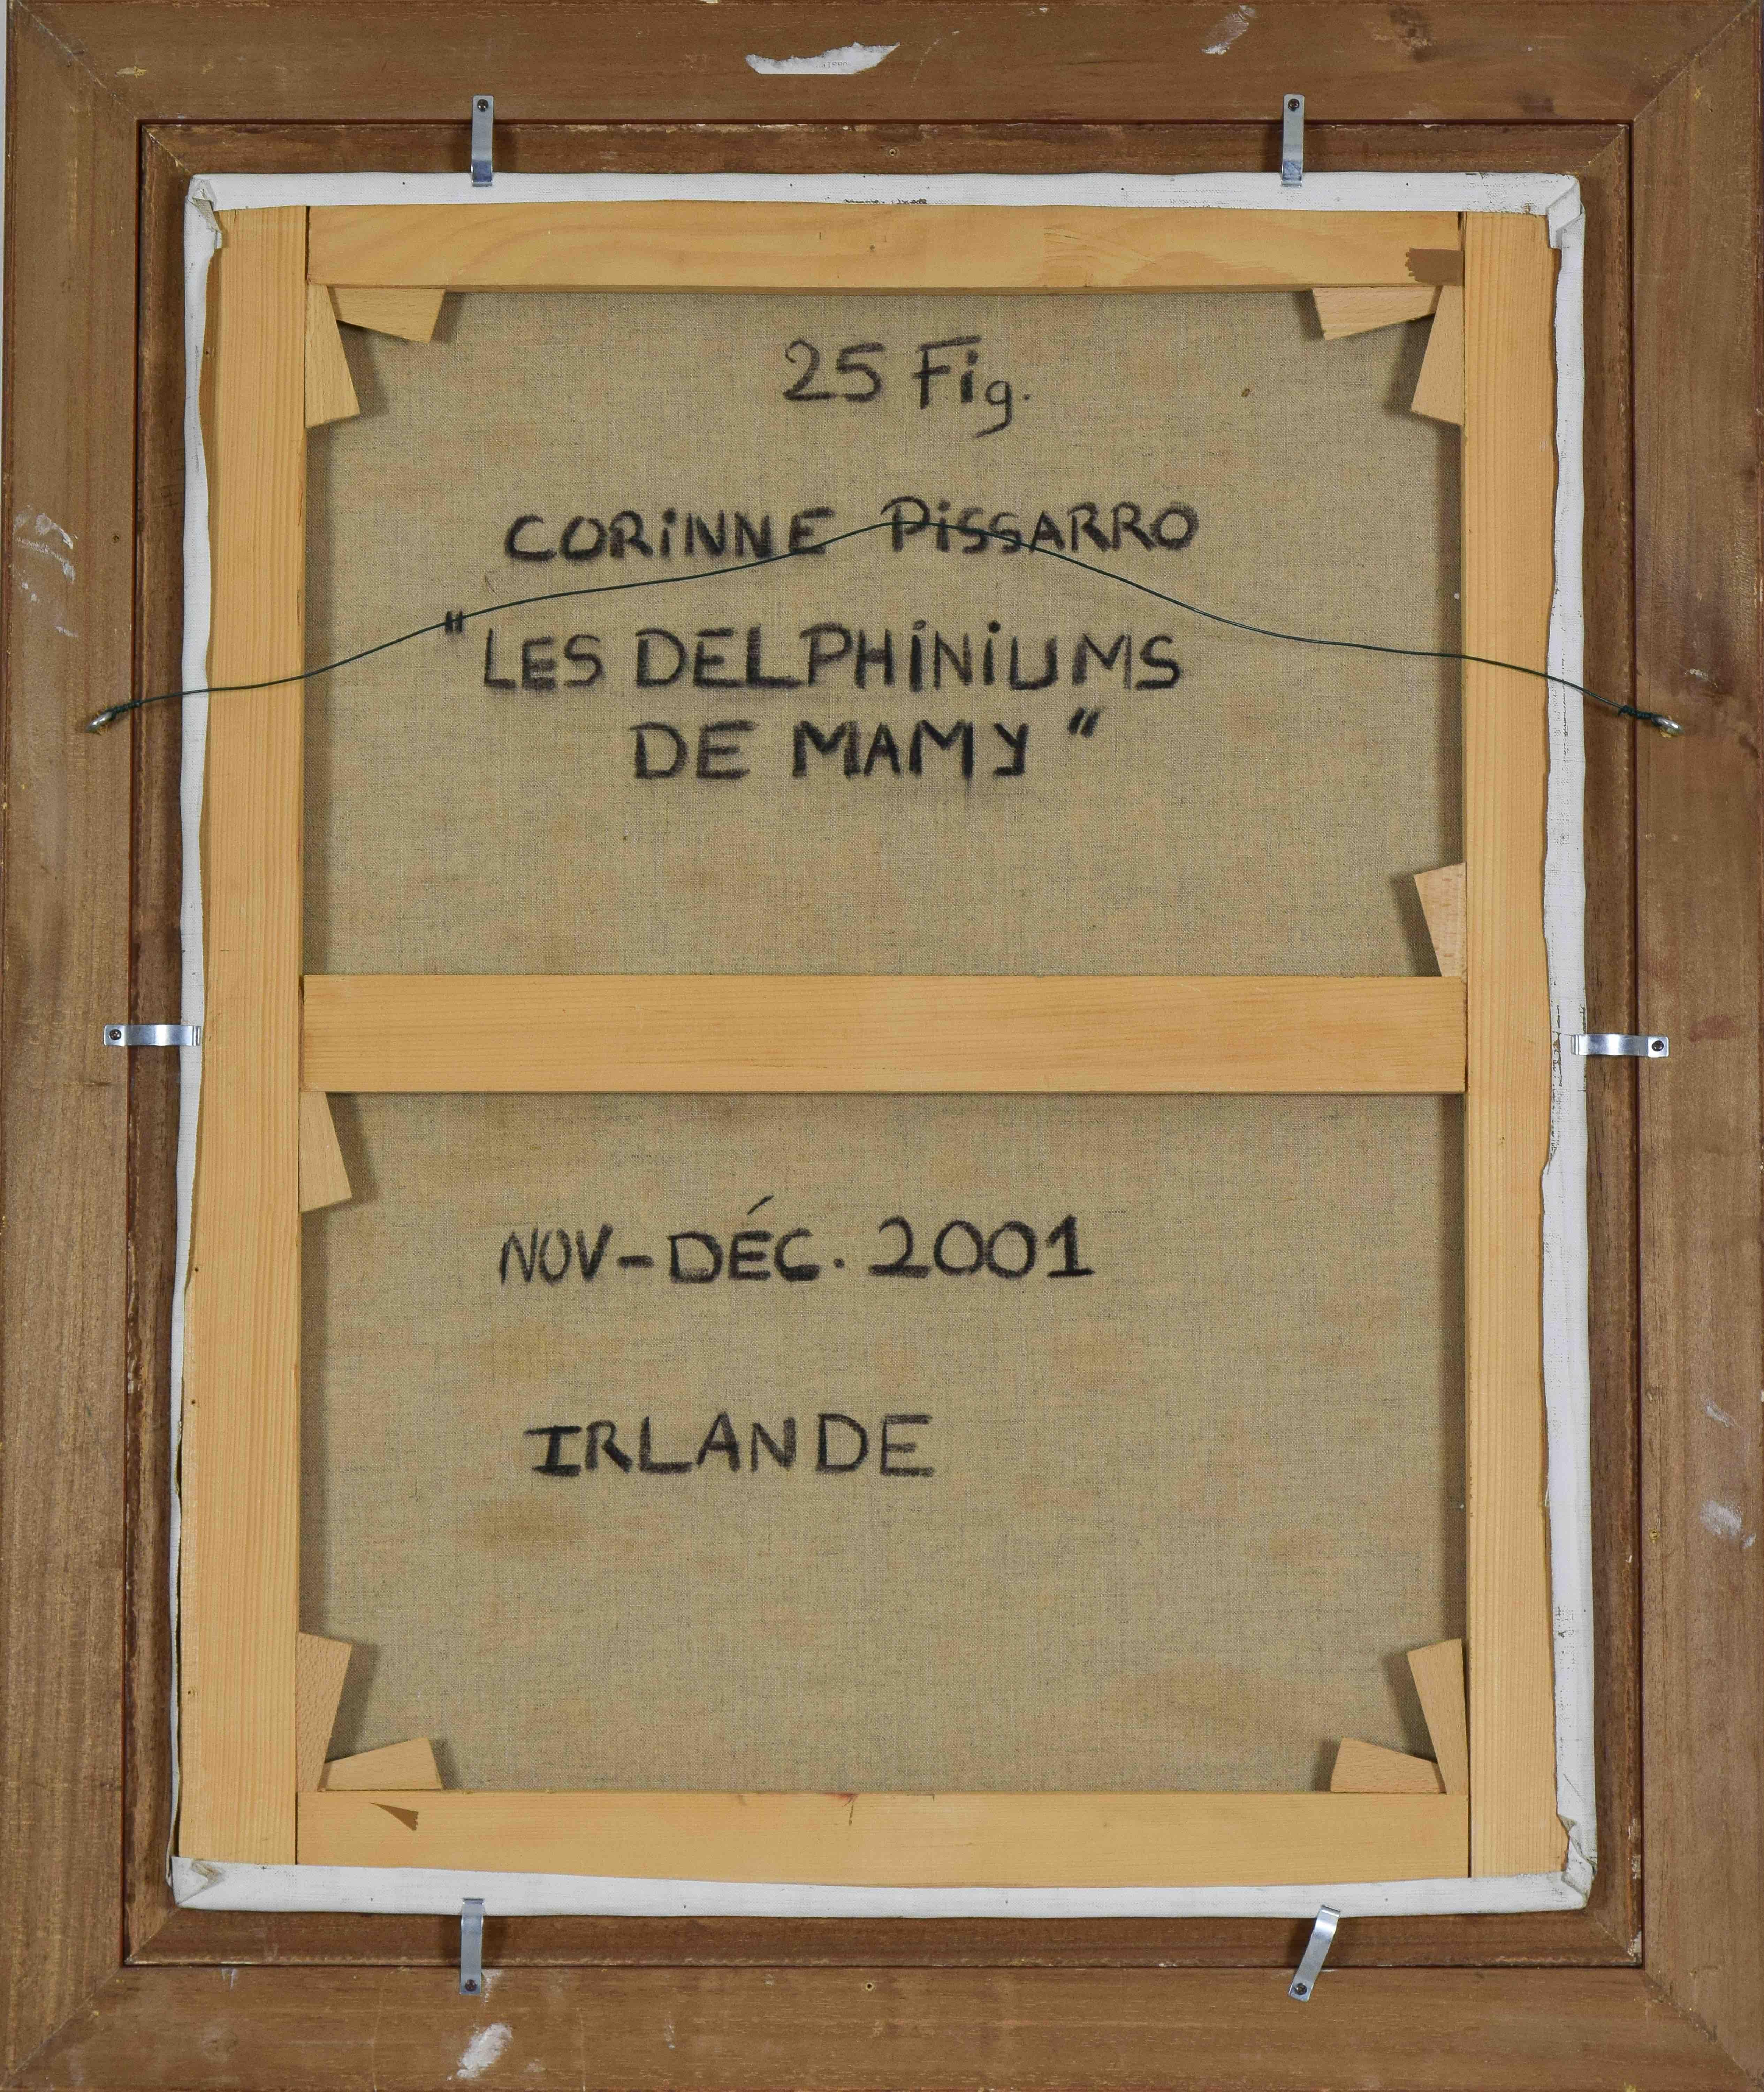 Les Delphiniums de Mamy by Corinne Pissarro - Contemporary flower painting For Sale 5